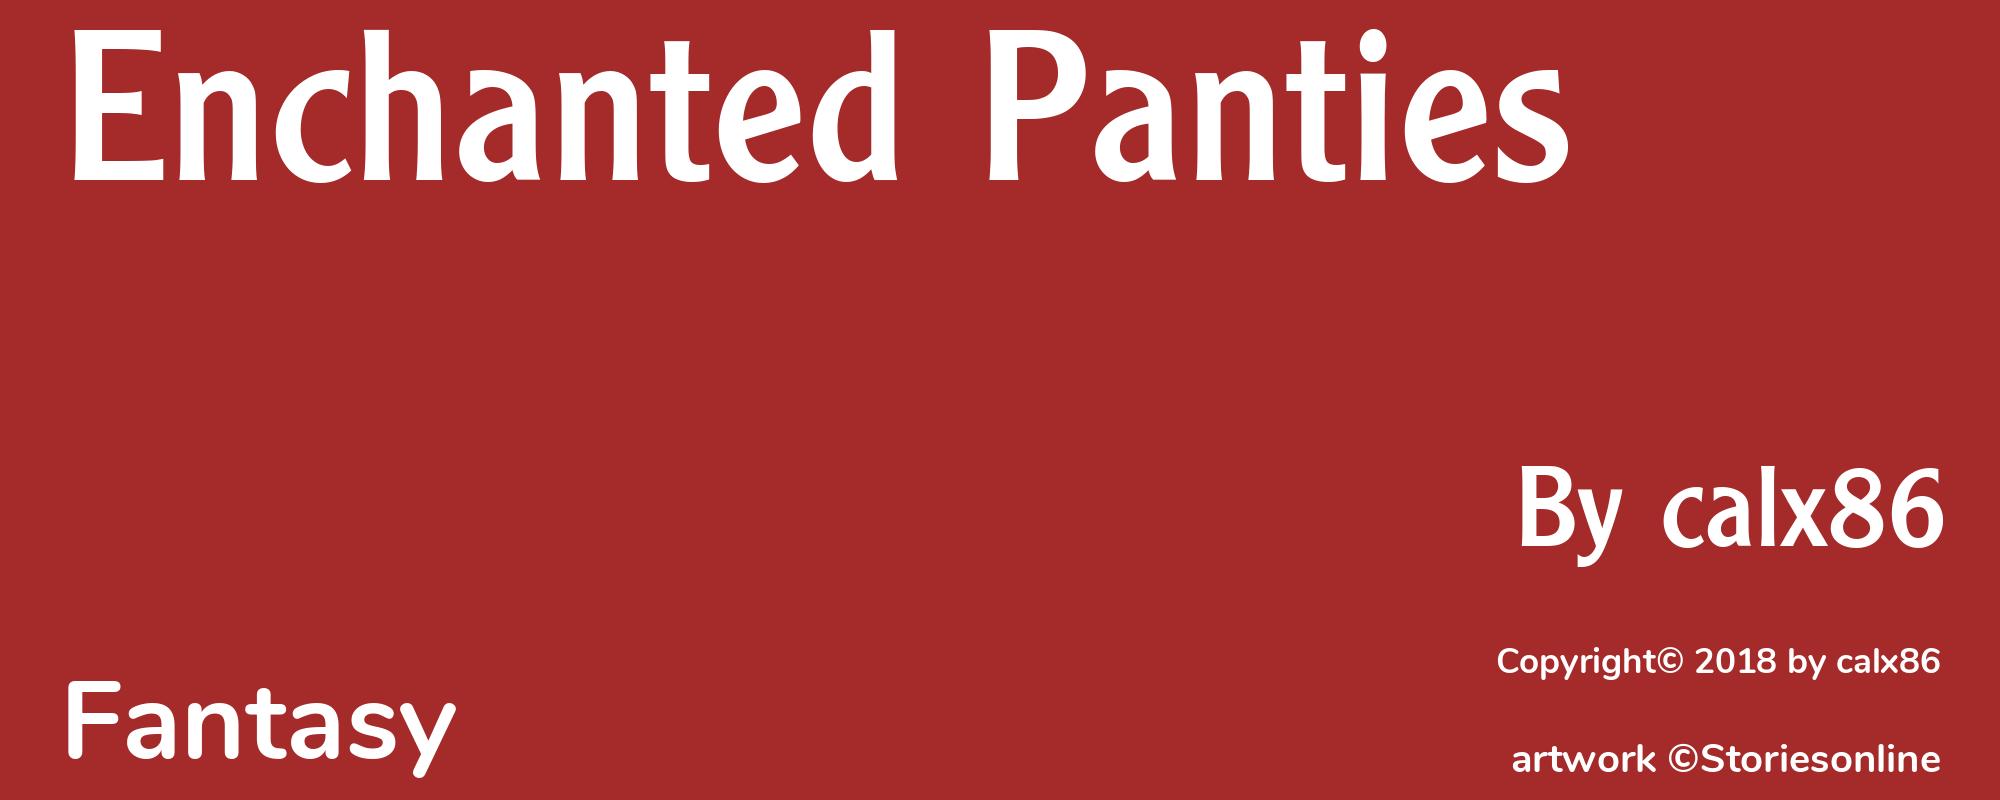 Enchanted Panties - Cover